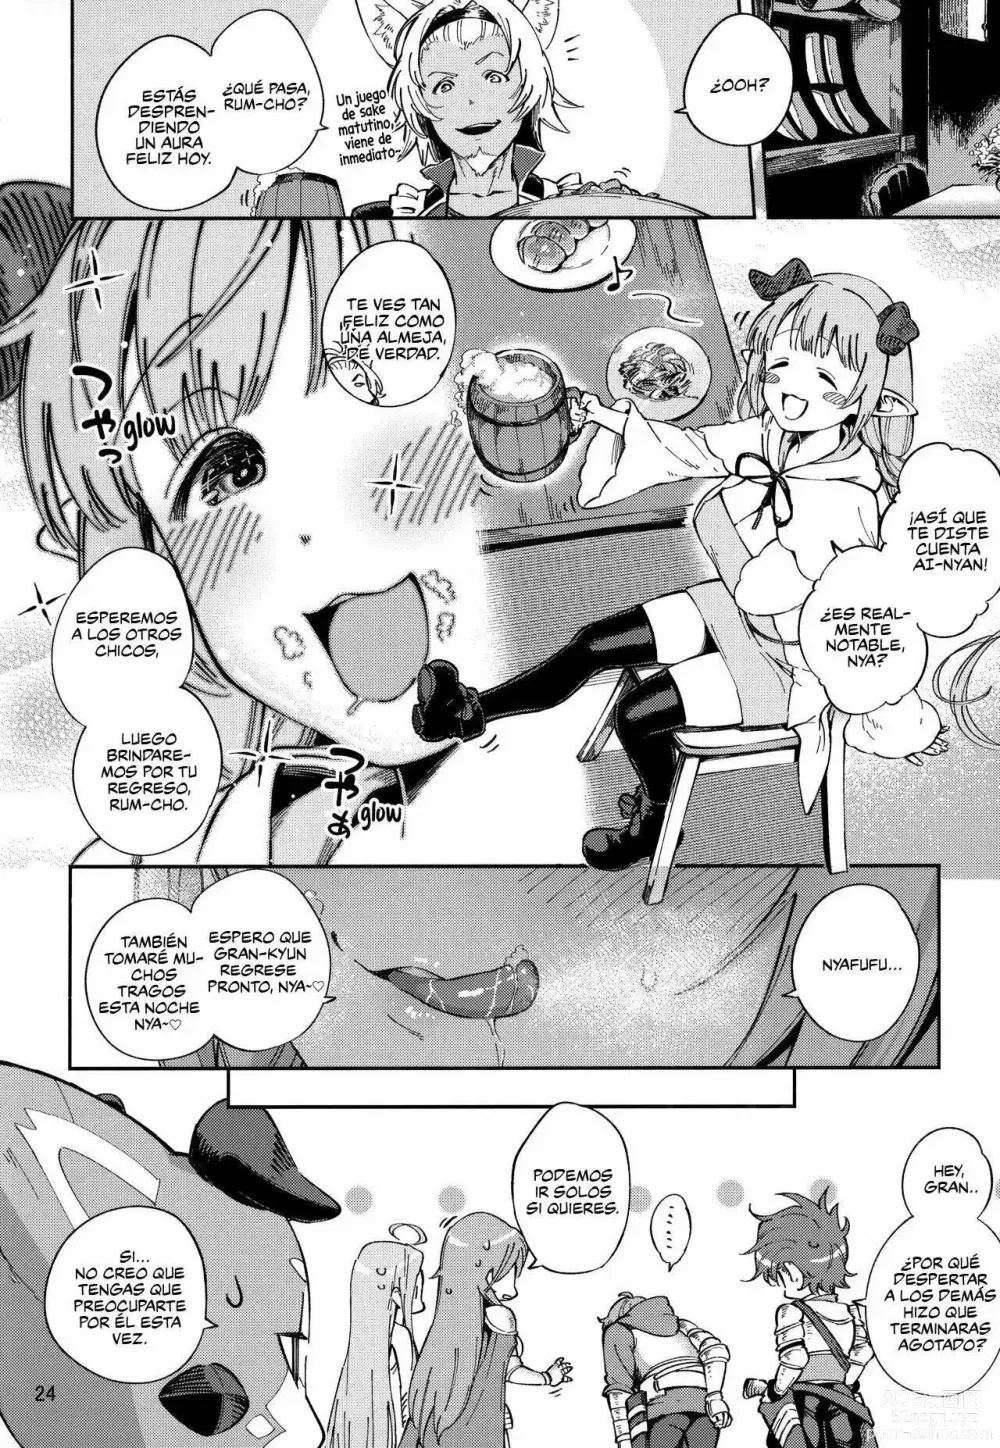 Page 23 of doujinshi Lamretta por la mañana